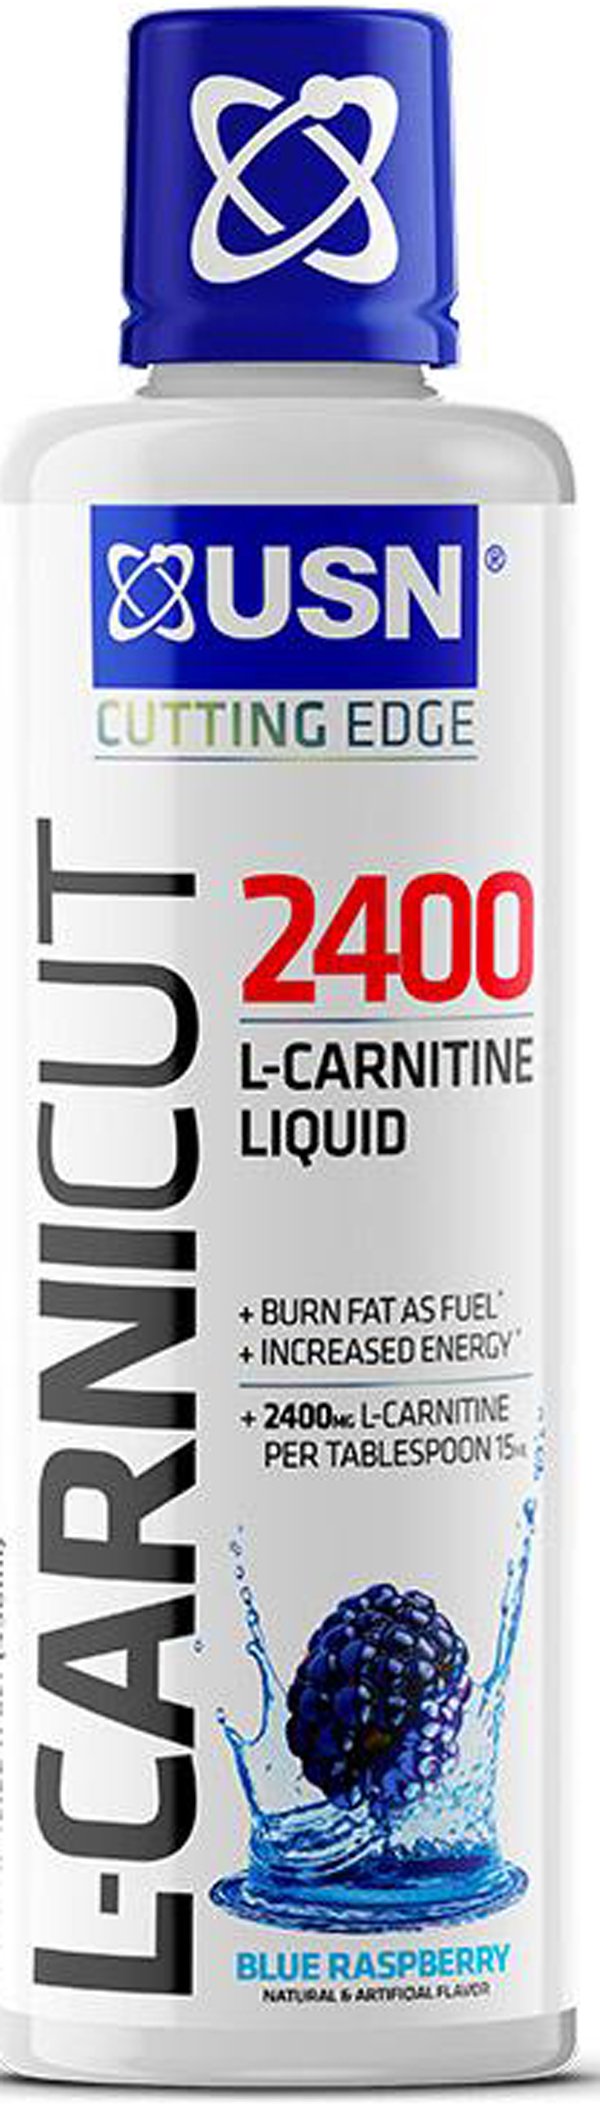 USN L-Carnicut Liquid 2400|Lowcostvitamin.com